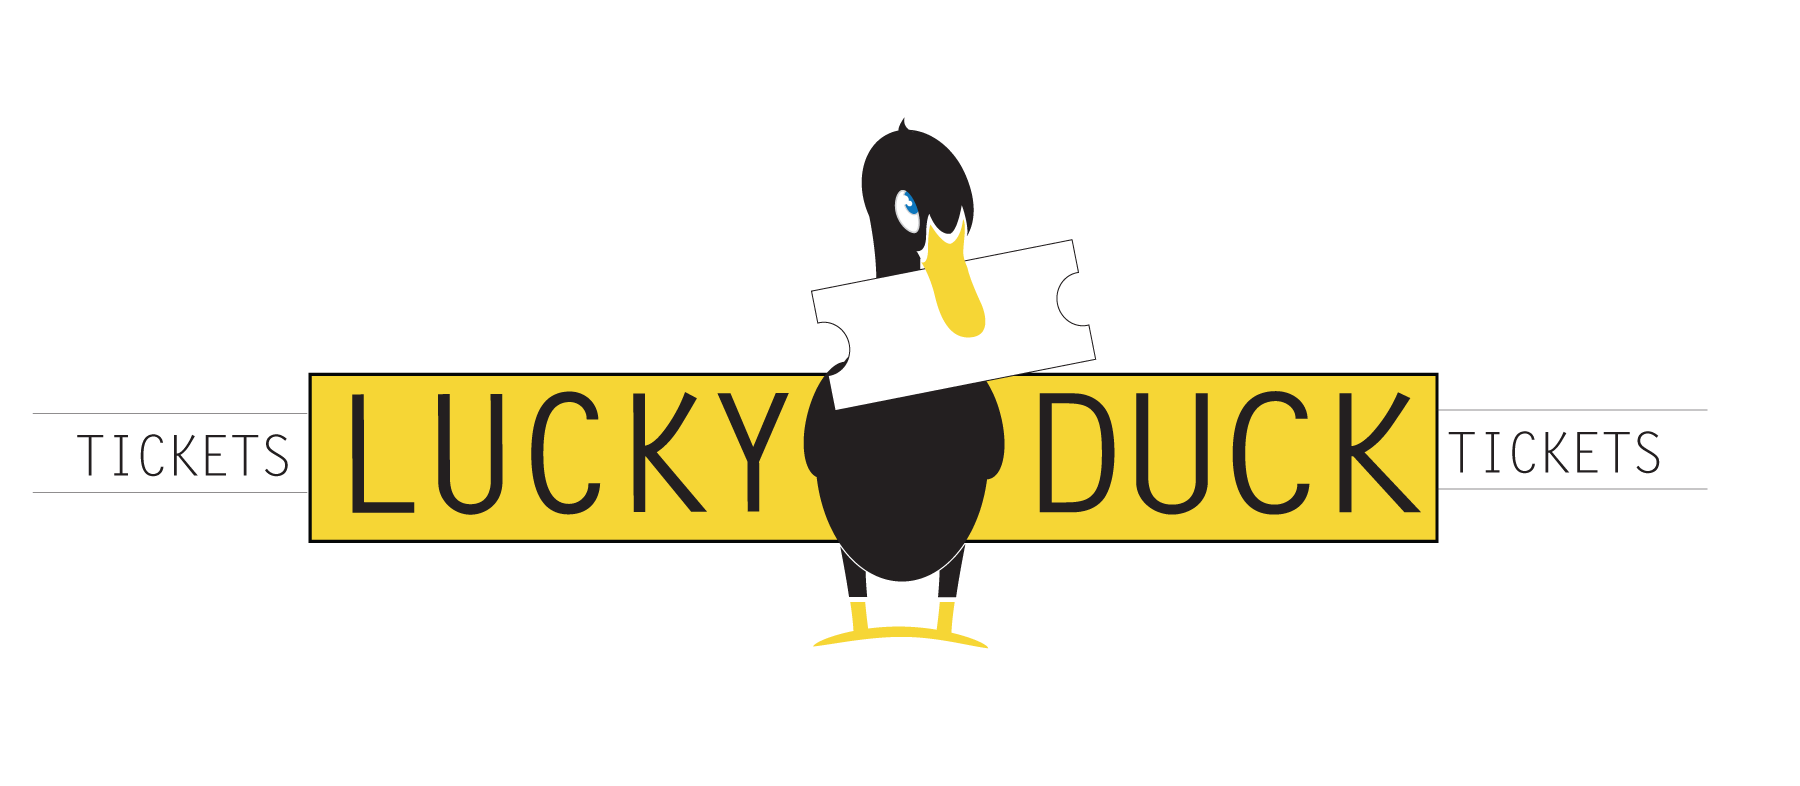 Yellow Ticket Logo - Lucky Duck Tickets logo | Portfolio | Graphic Design, Logos